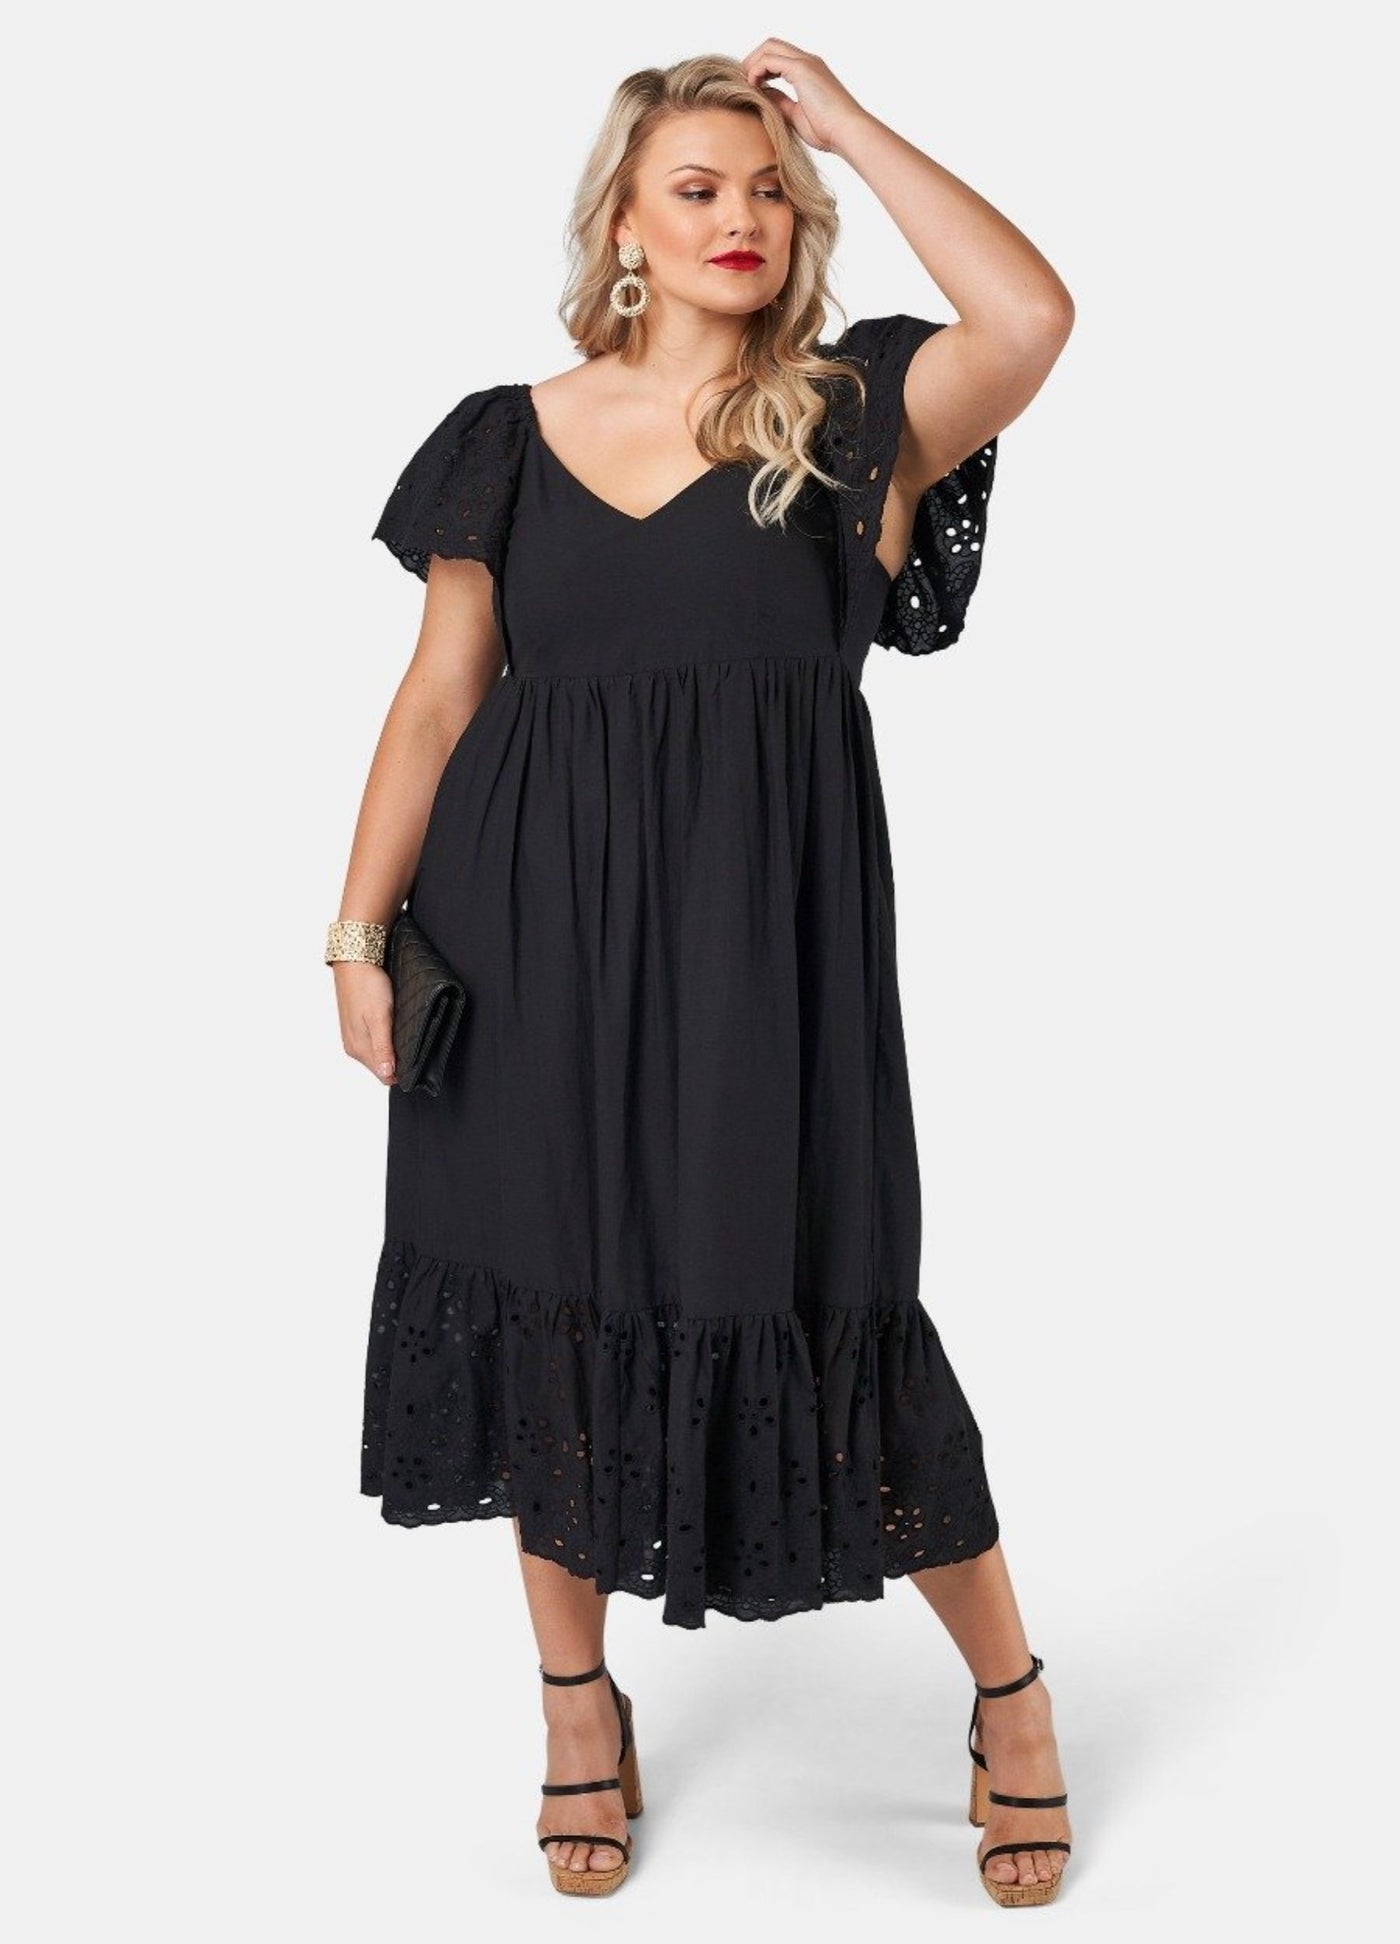 Blonde model wearing black cotton midi dress